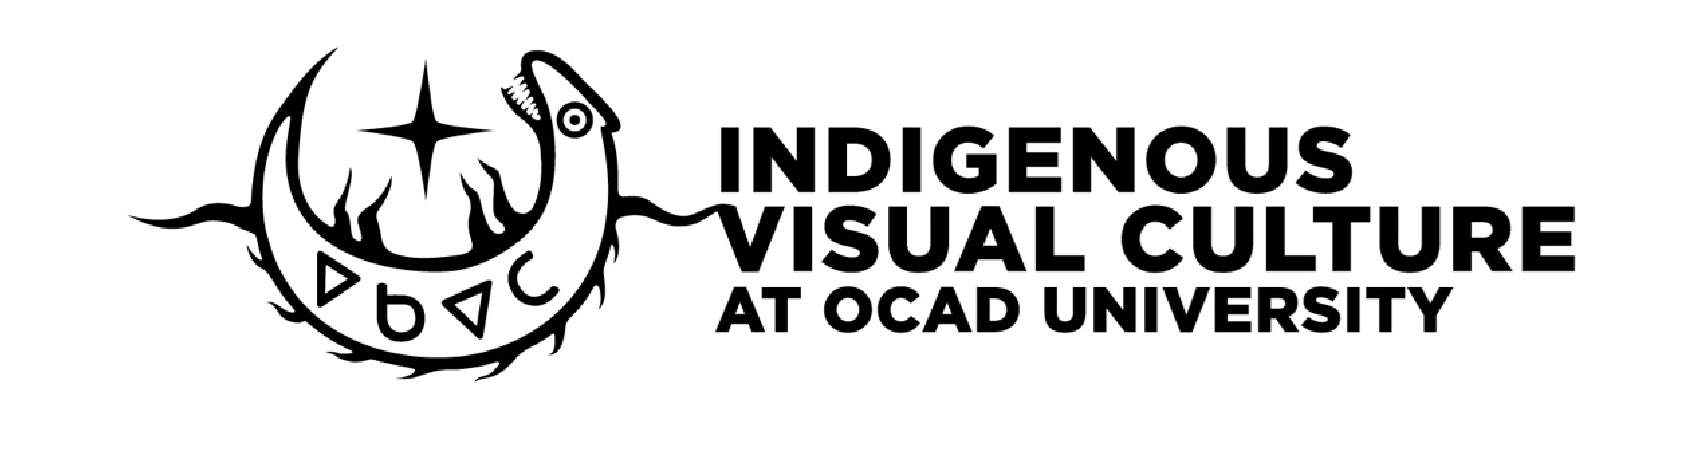 Indigenous Visual Culture at OCAD University logo